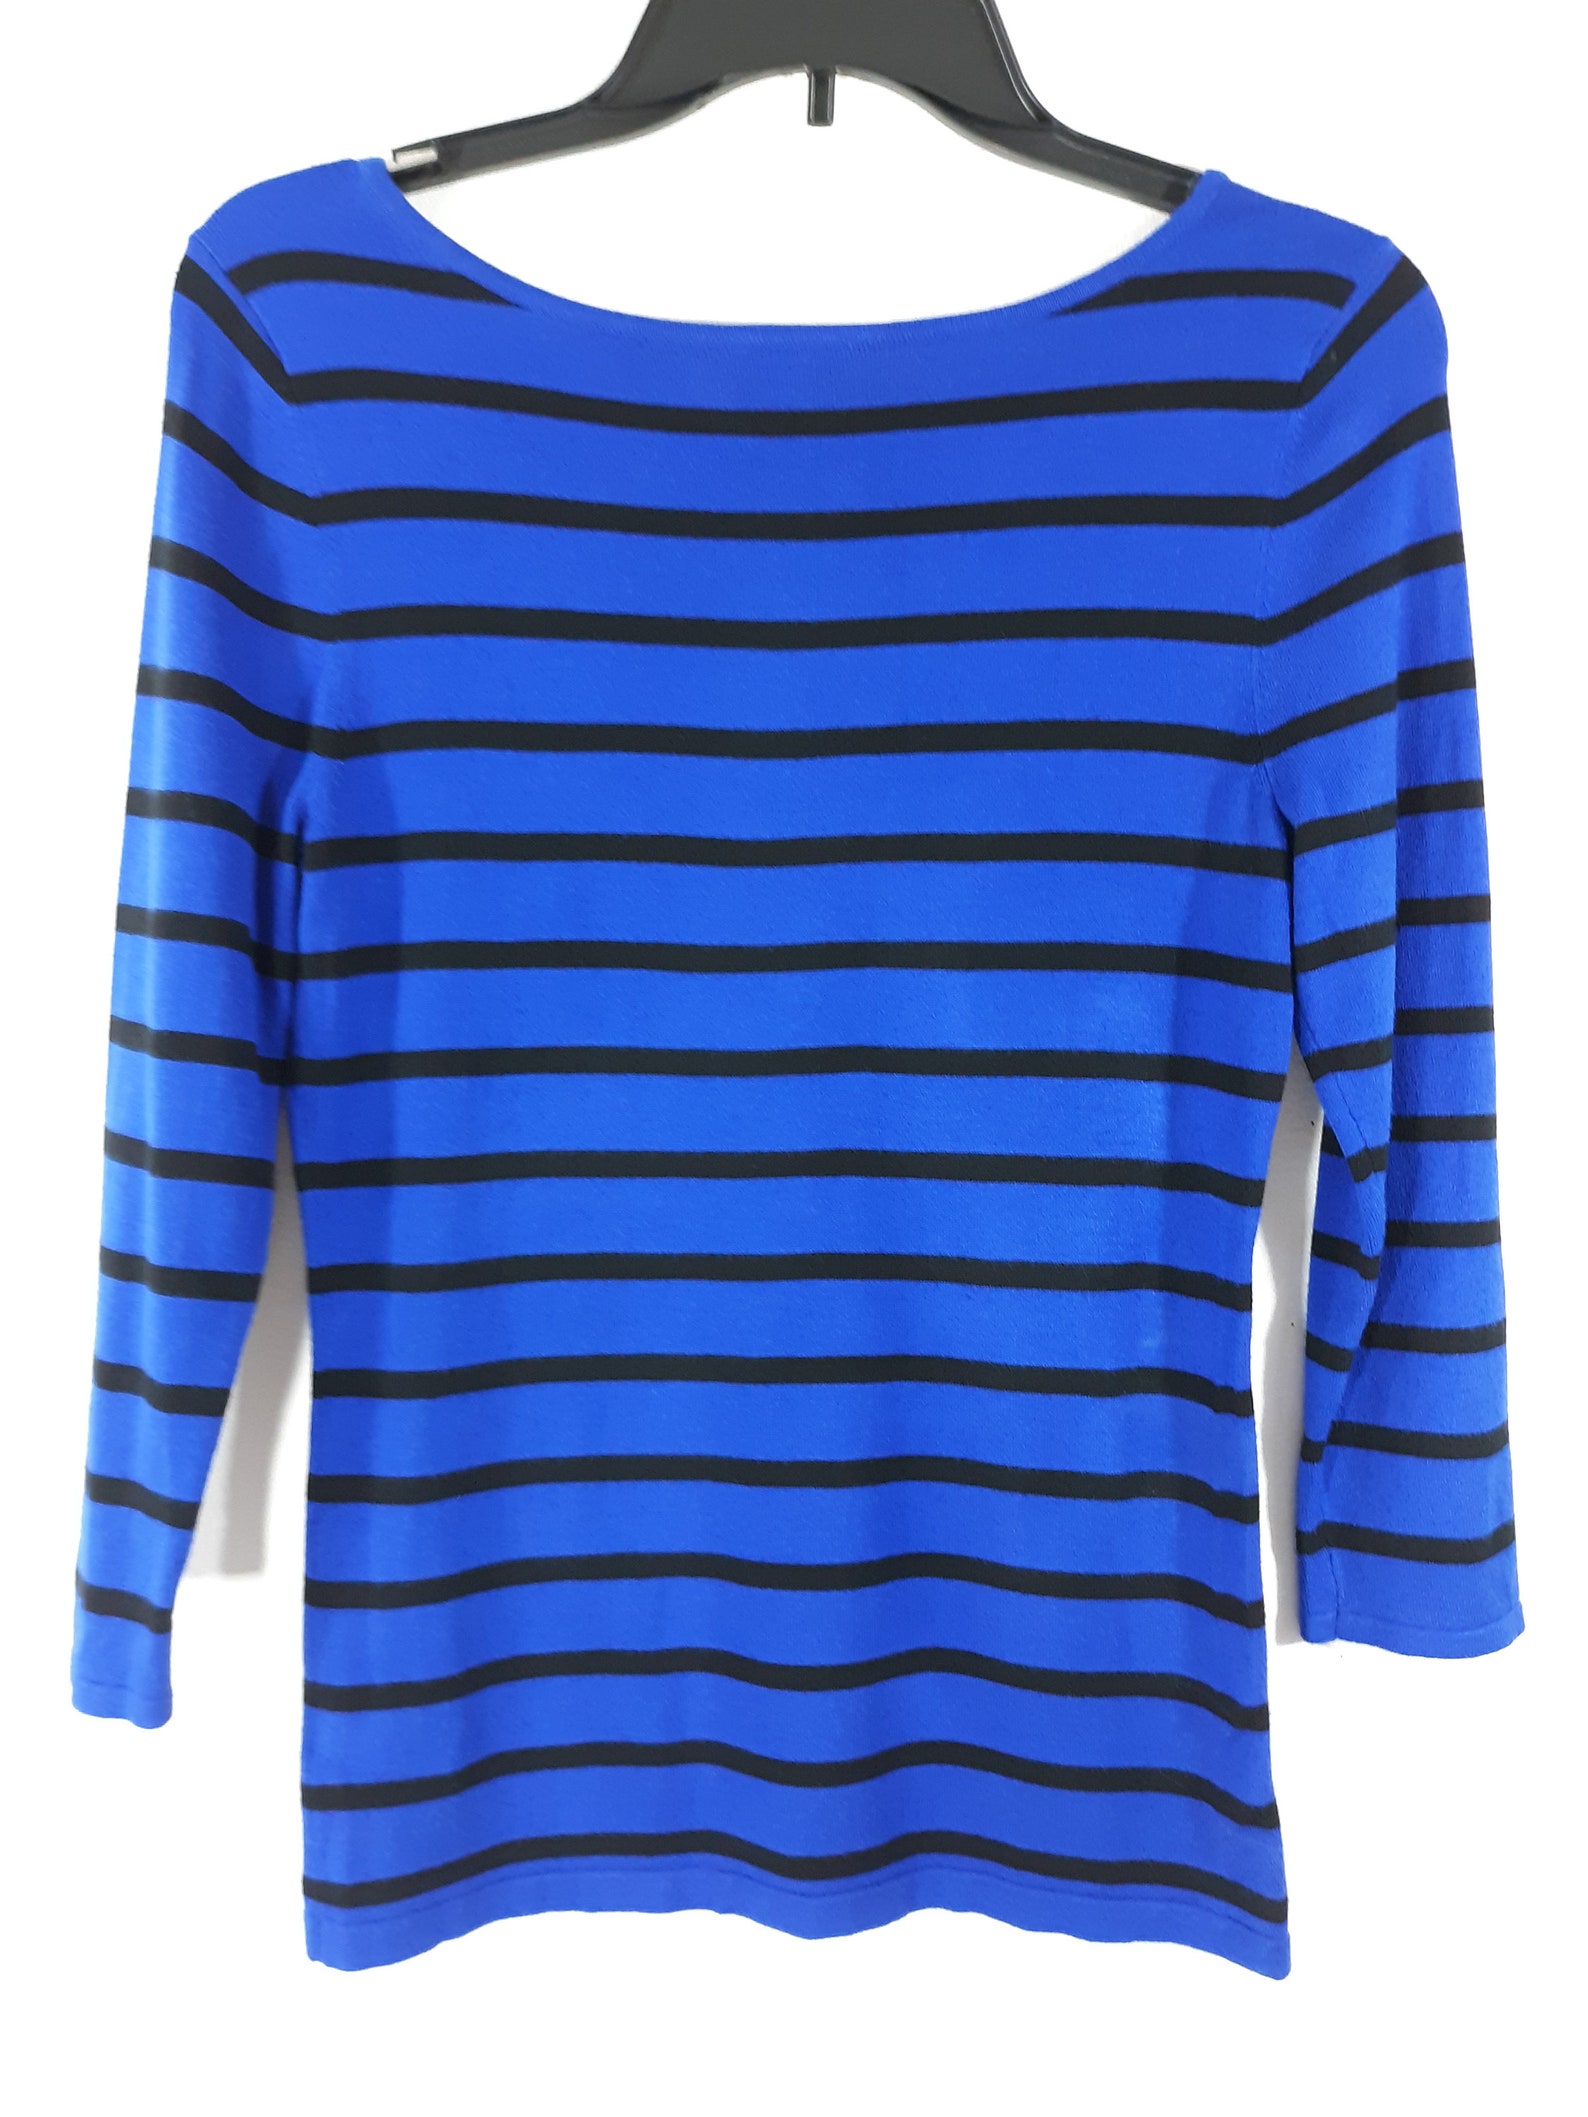 Women's Top Shirt Black Blue Striped Stretchy Rayon | Etsy